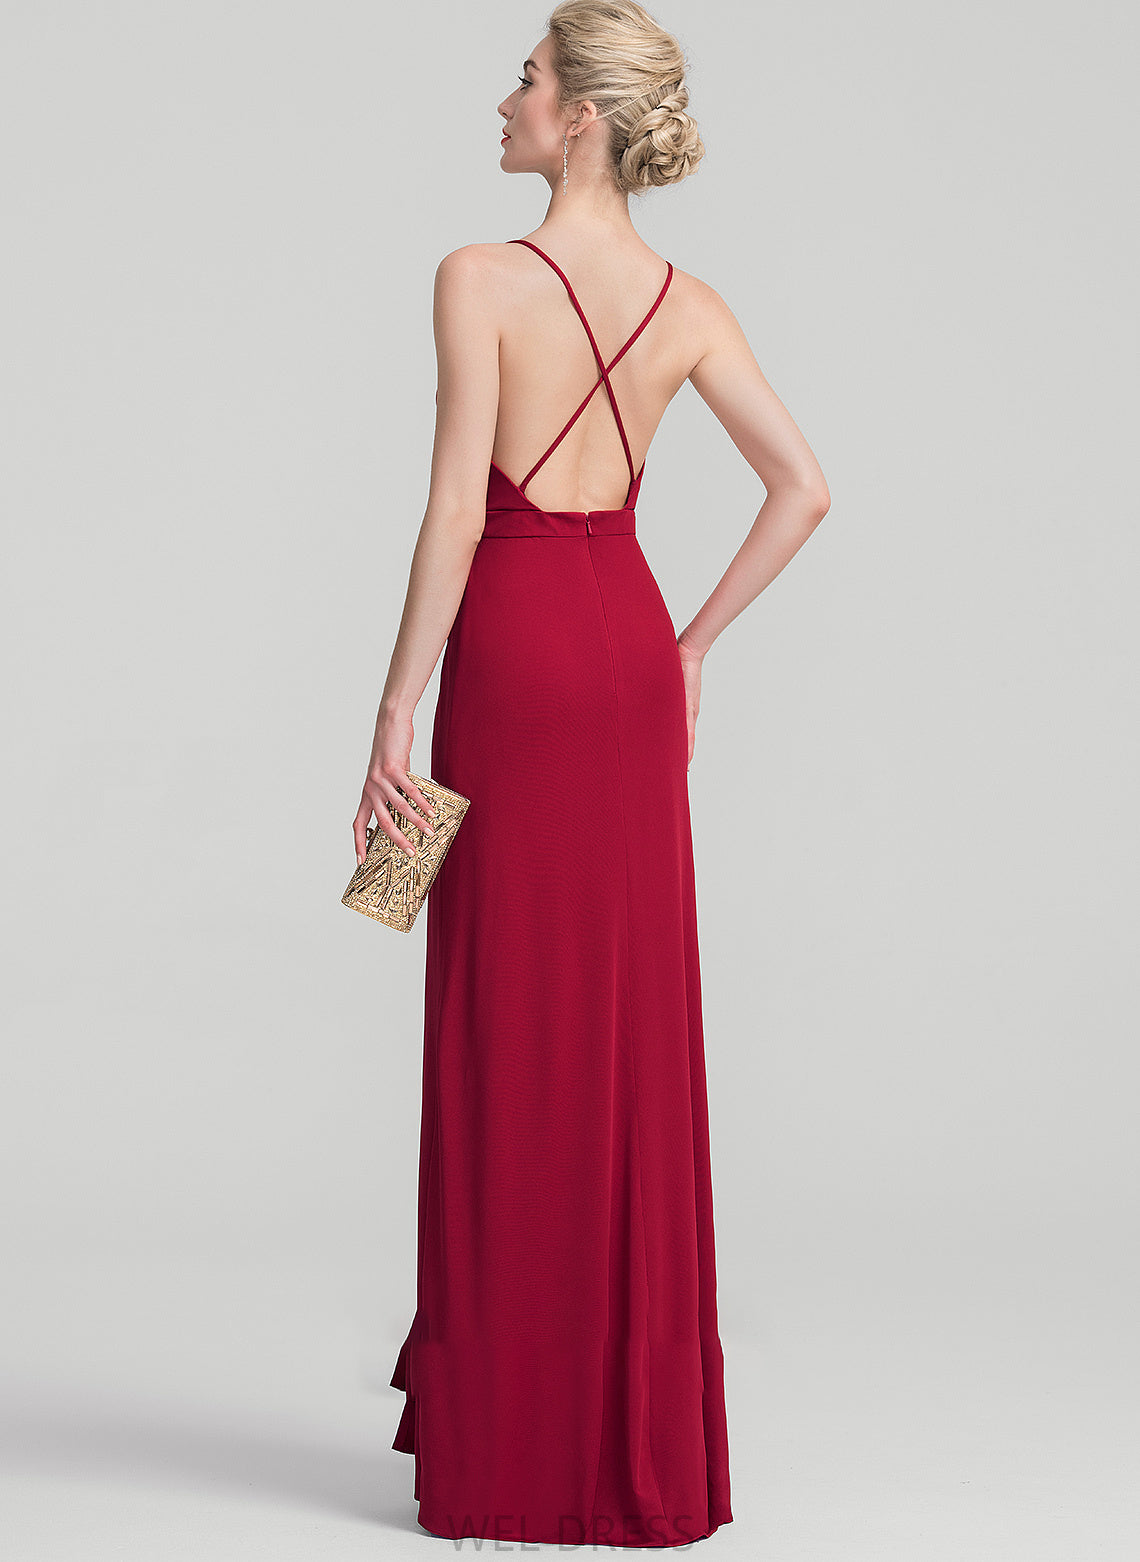 Lindsay Jersey Prom Dresses Ruffle Sheath/Column V-neck Floor-Length With